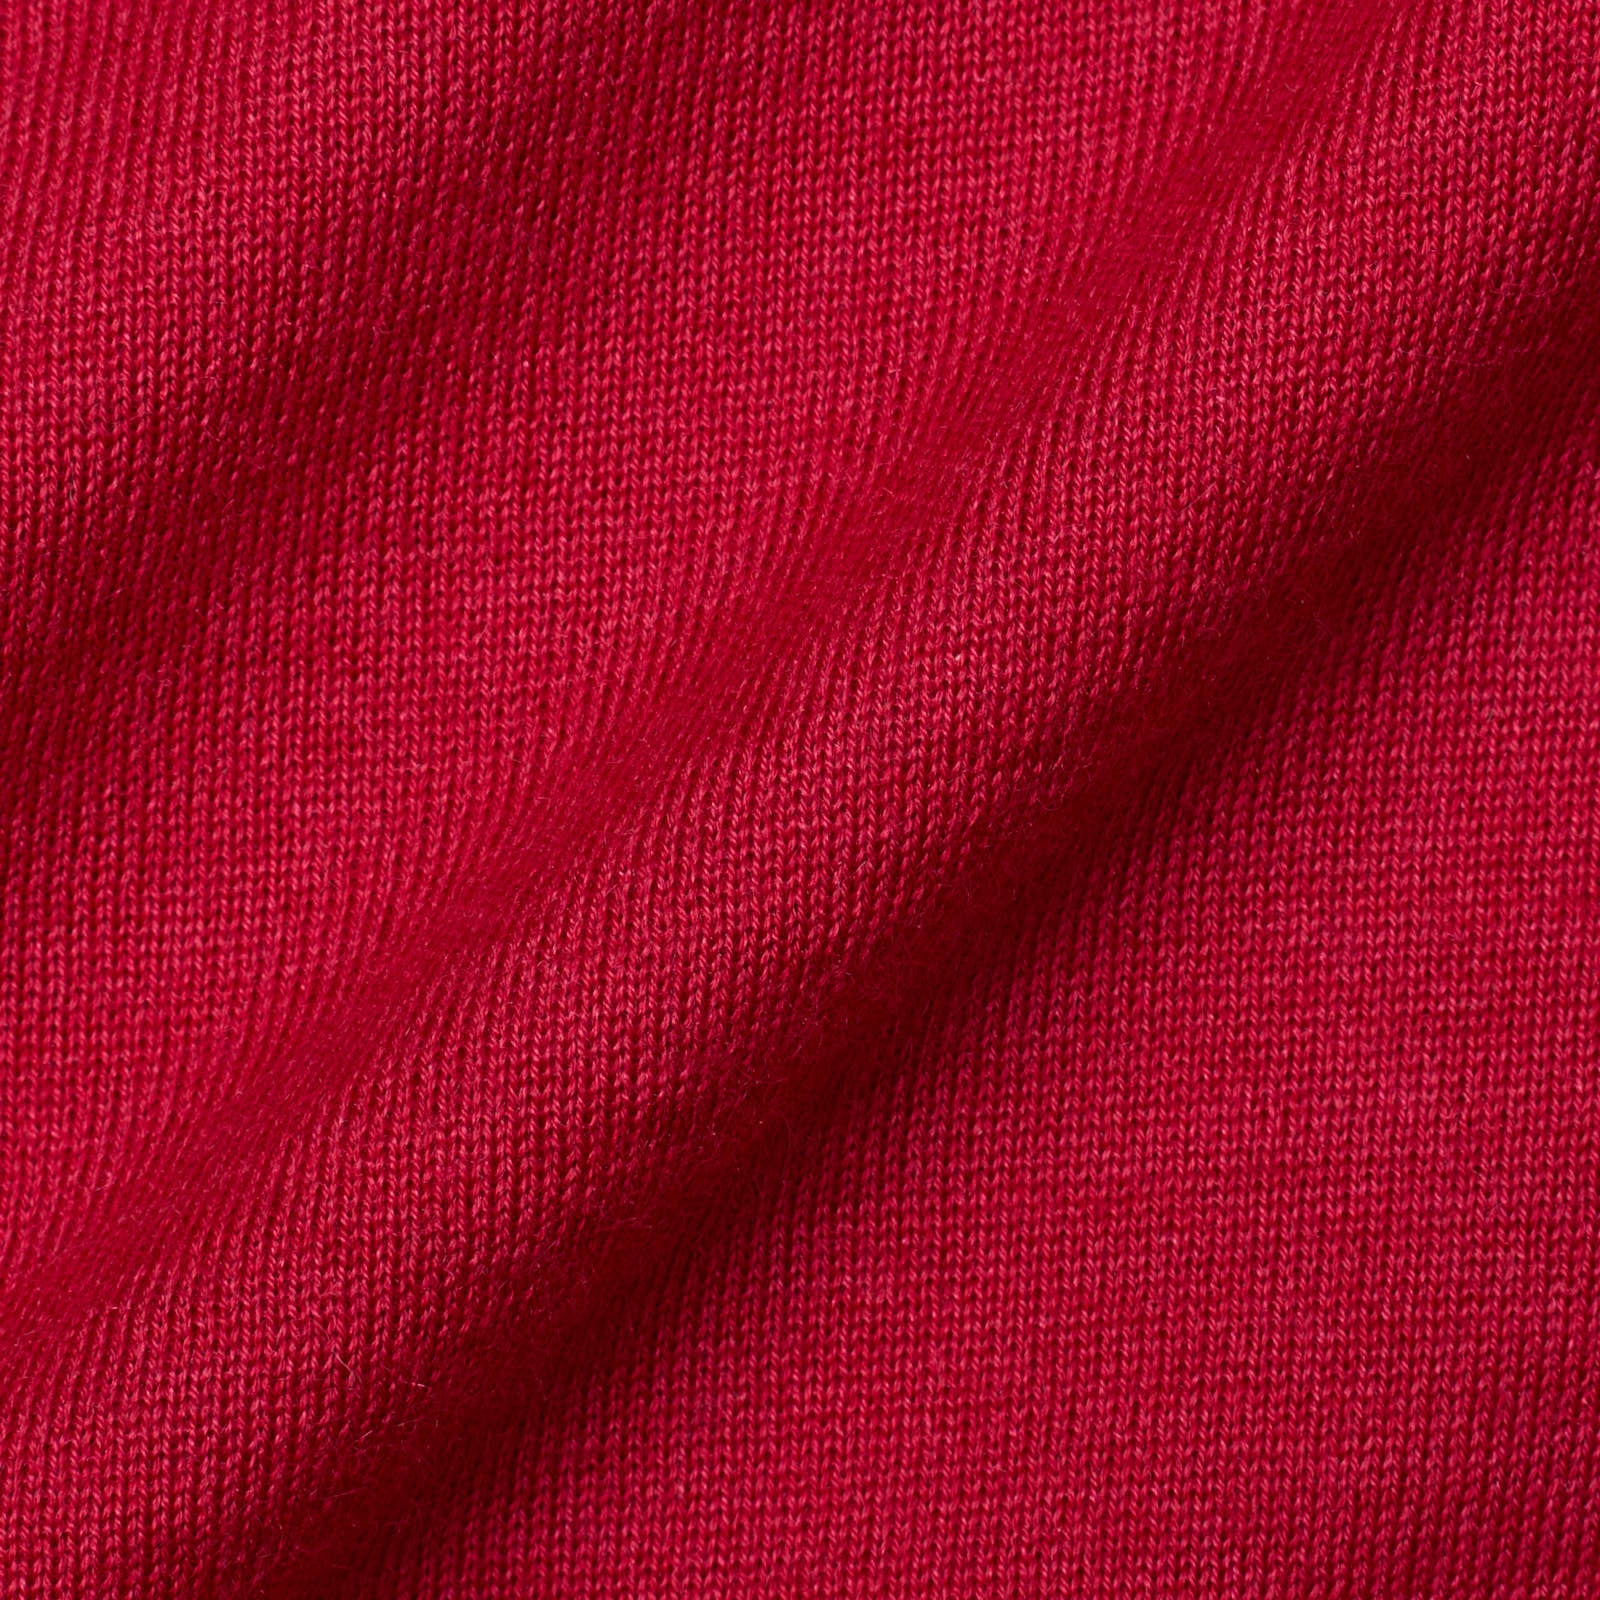 ONES Red-Beige Cashmere-Silk Knit 6 Button Sweater Vest EU 50 NEW US M